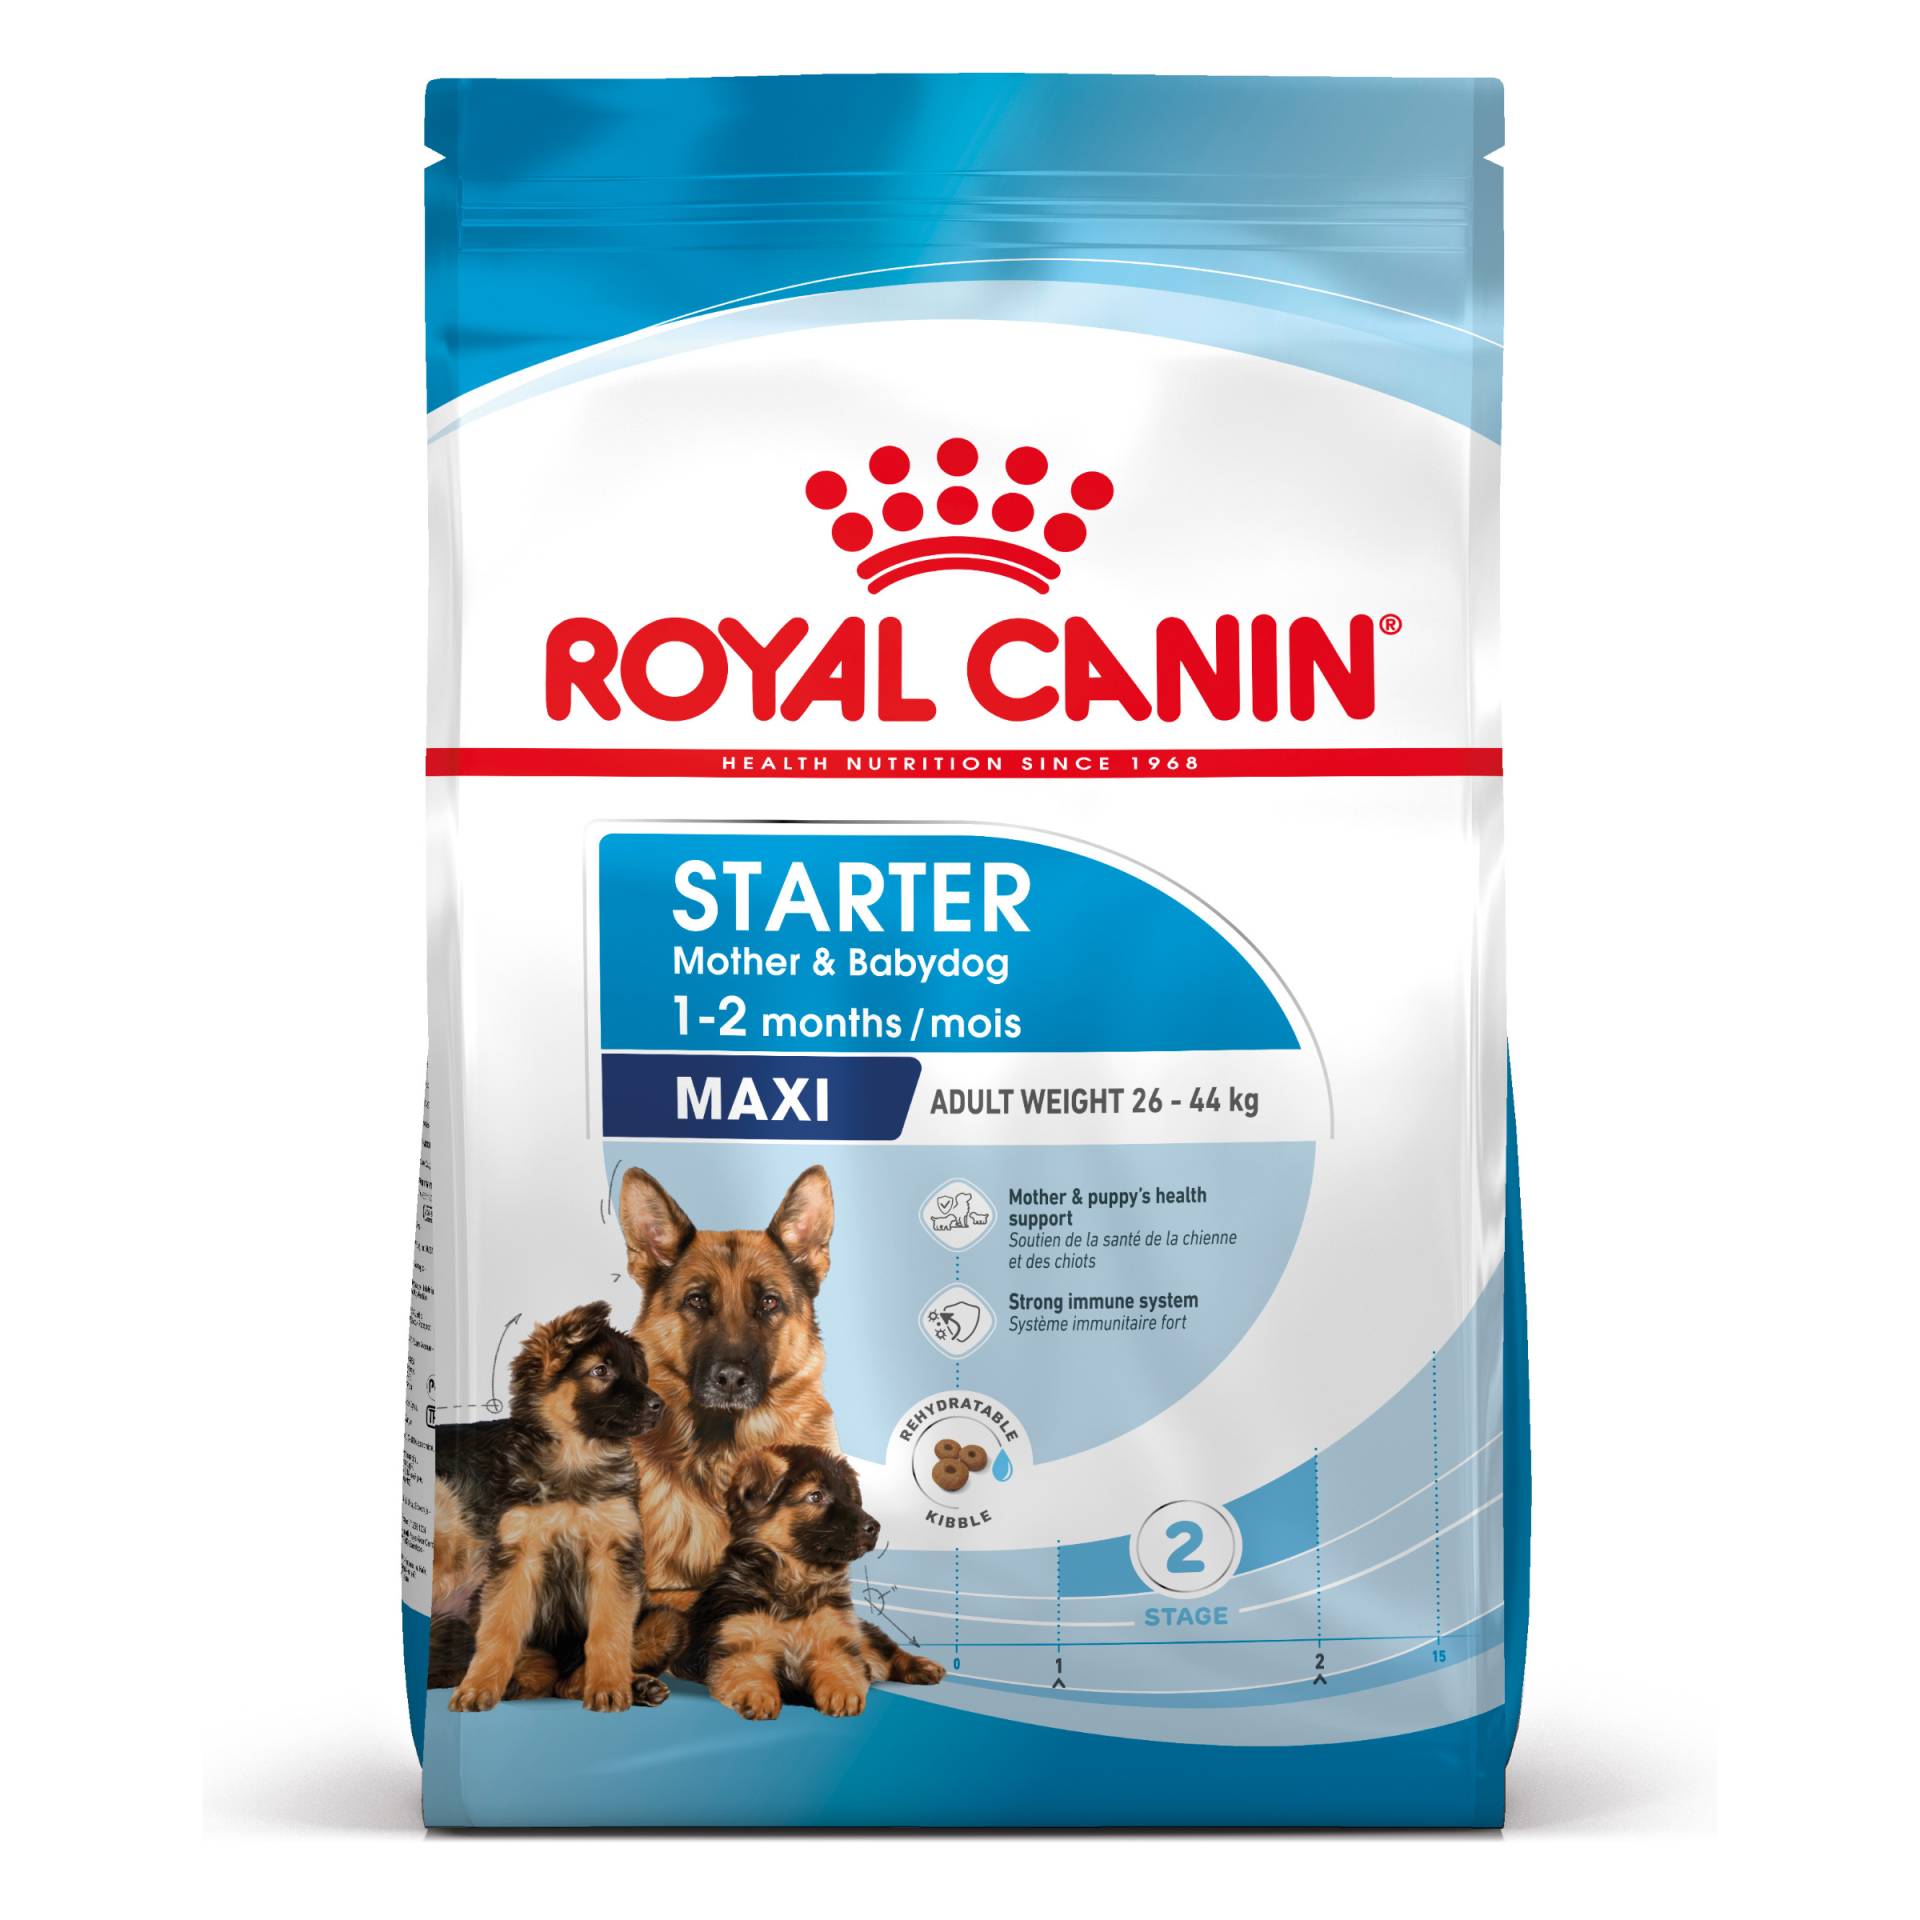 Royal Canin Maxi Starter Mother & Babydog - Sparpaket: 2 x 15 kg von Royal Canin Size